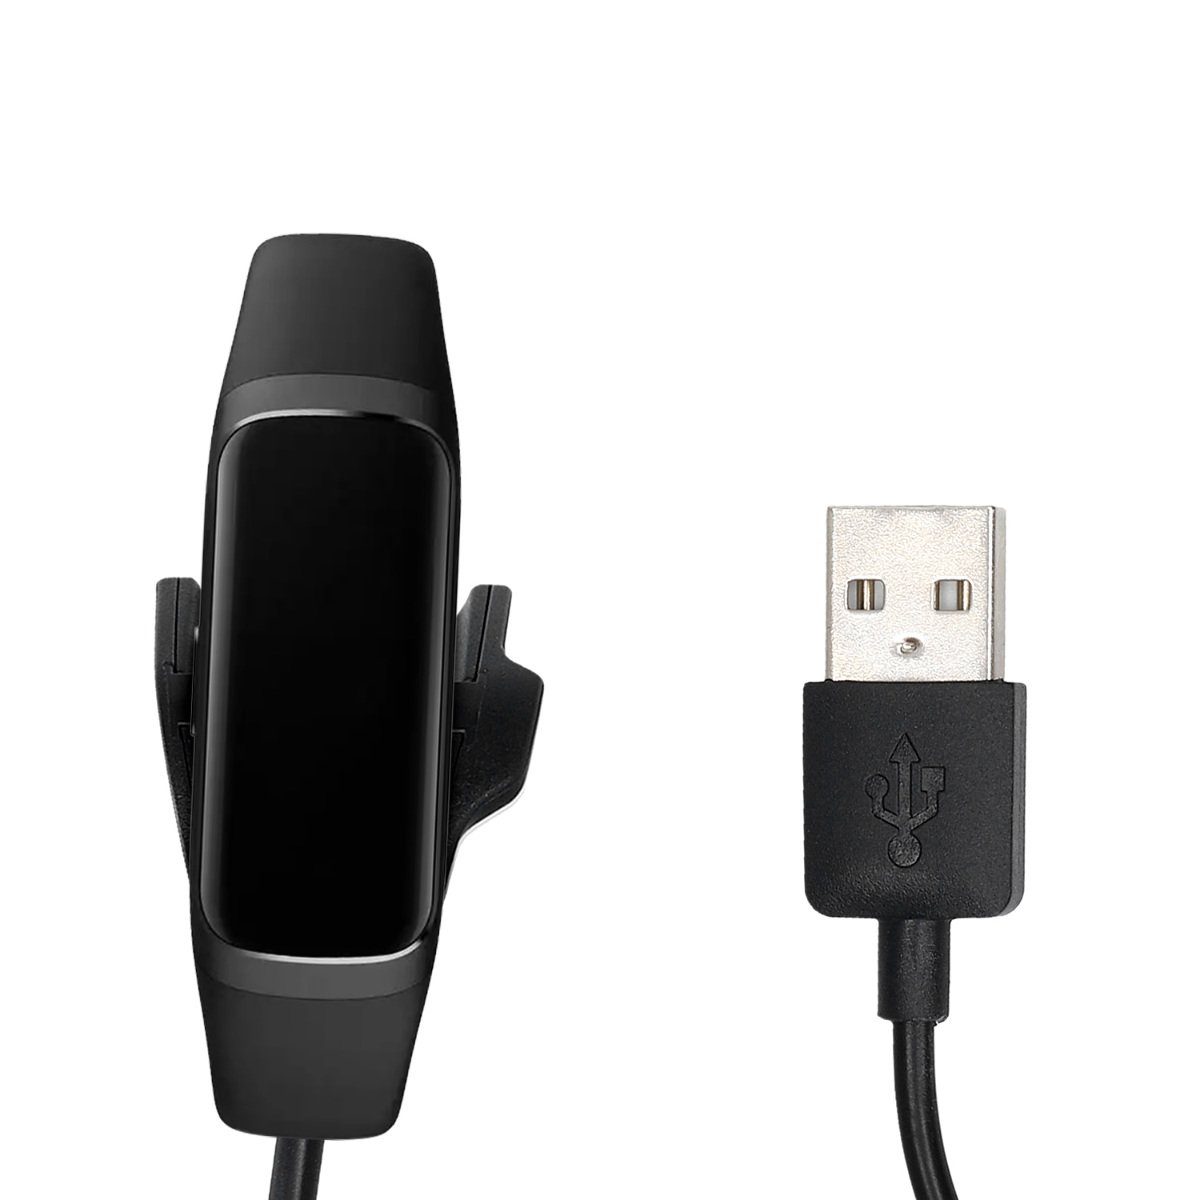 Fitnesstracker Kabel Smart Aufladekabel Galaxy kwmobile USB - e Elektro-Kabel, Fit Watch Ersatzkabel - für Charger Samsung Ladekabel